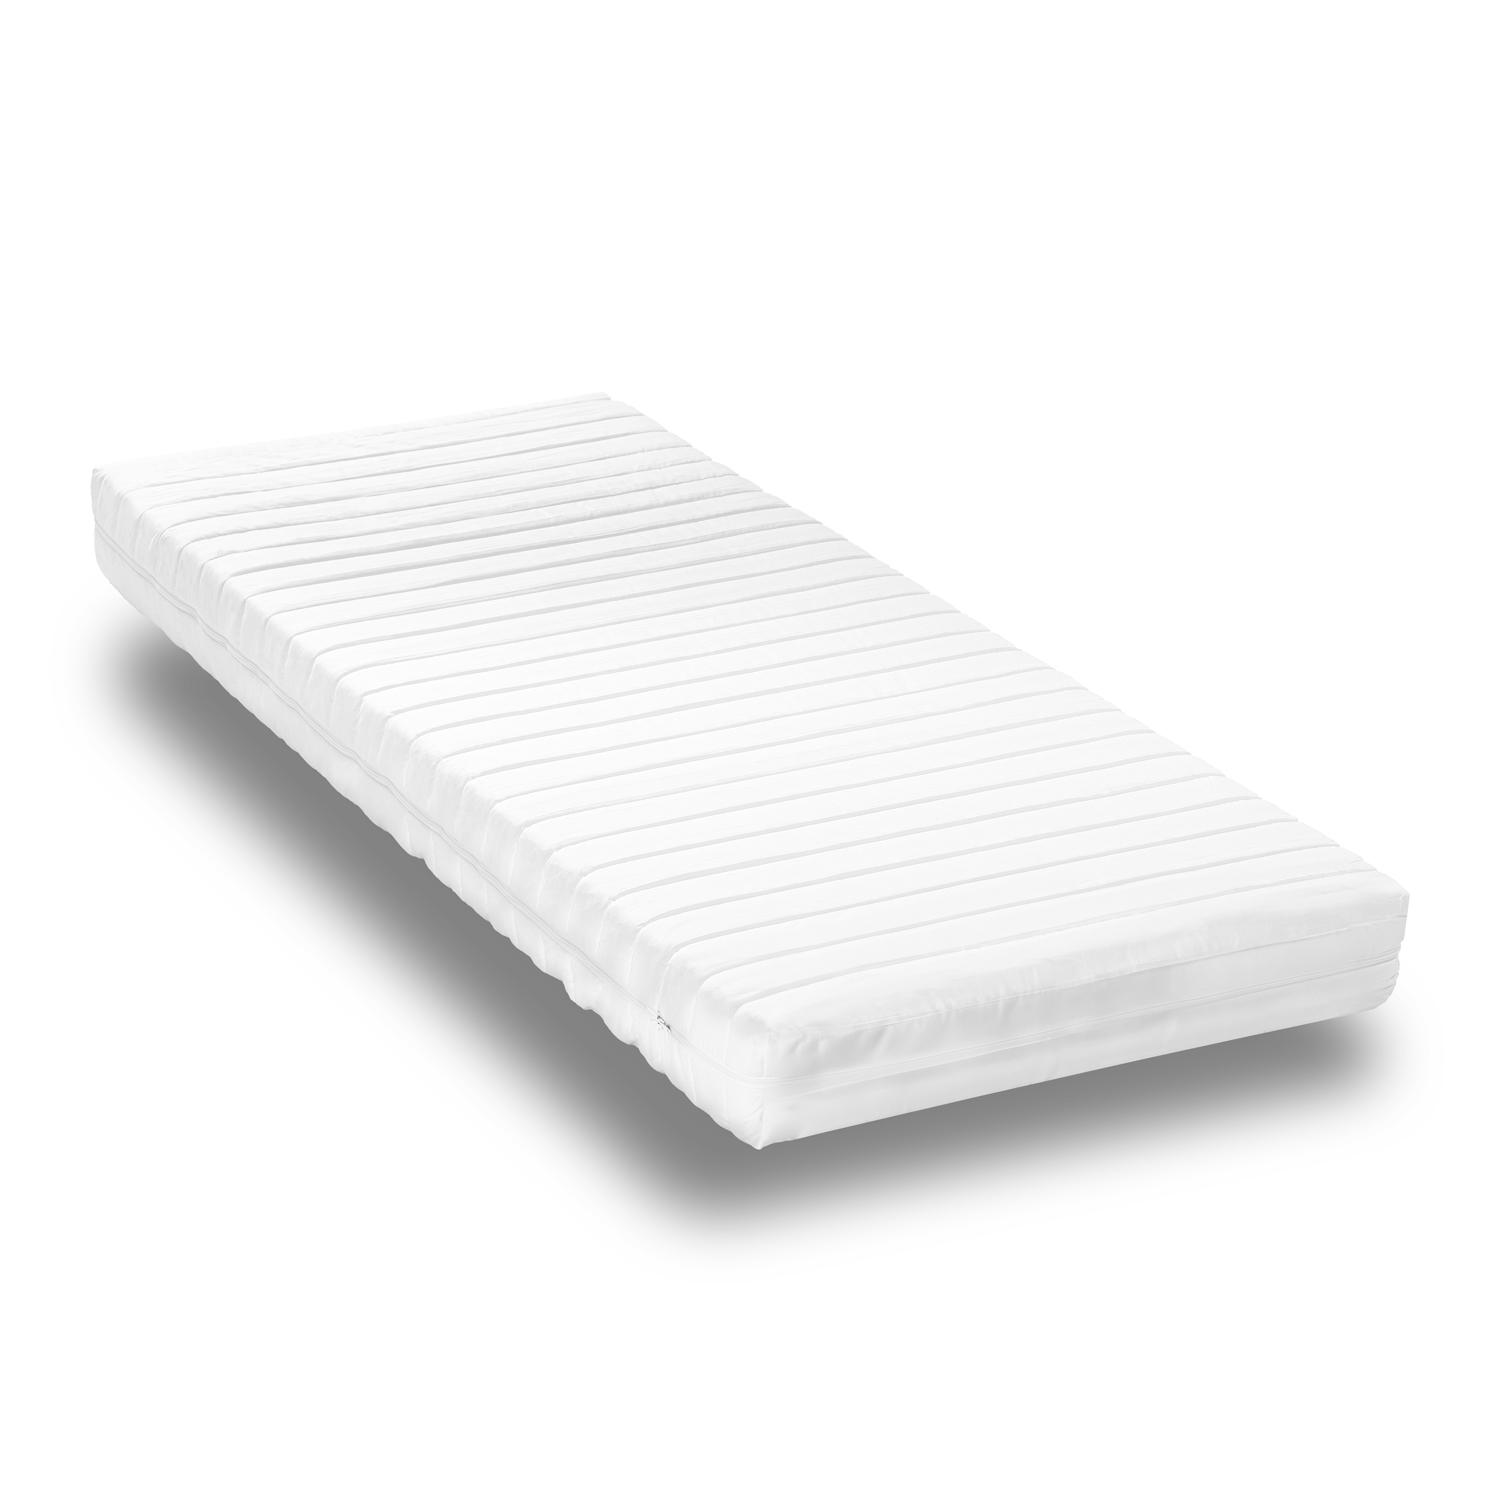 Cold foam mattress K16 80 x 200 cm, height 16 cm, firmness level H2/H3 Twin